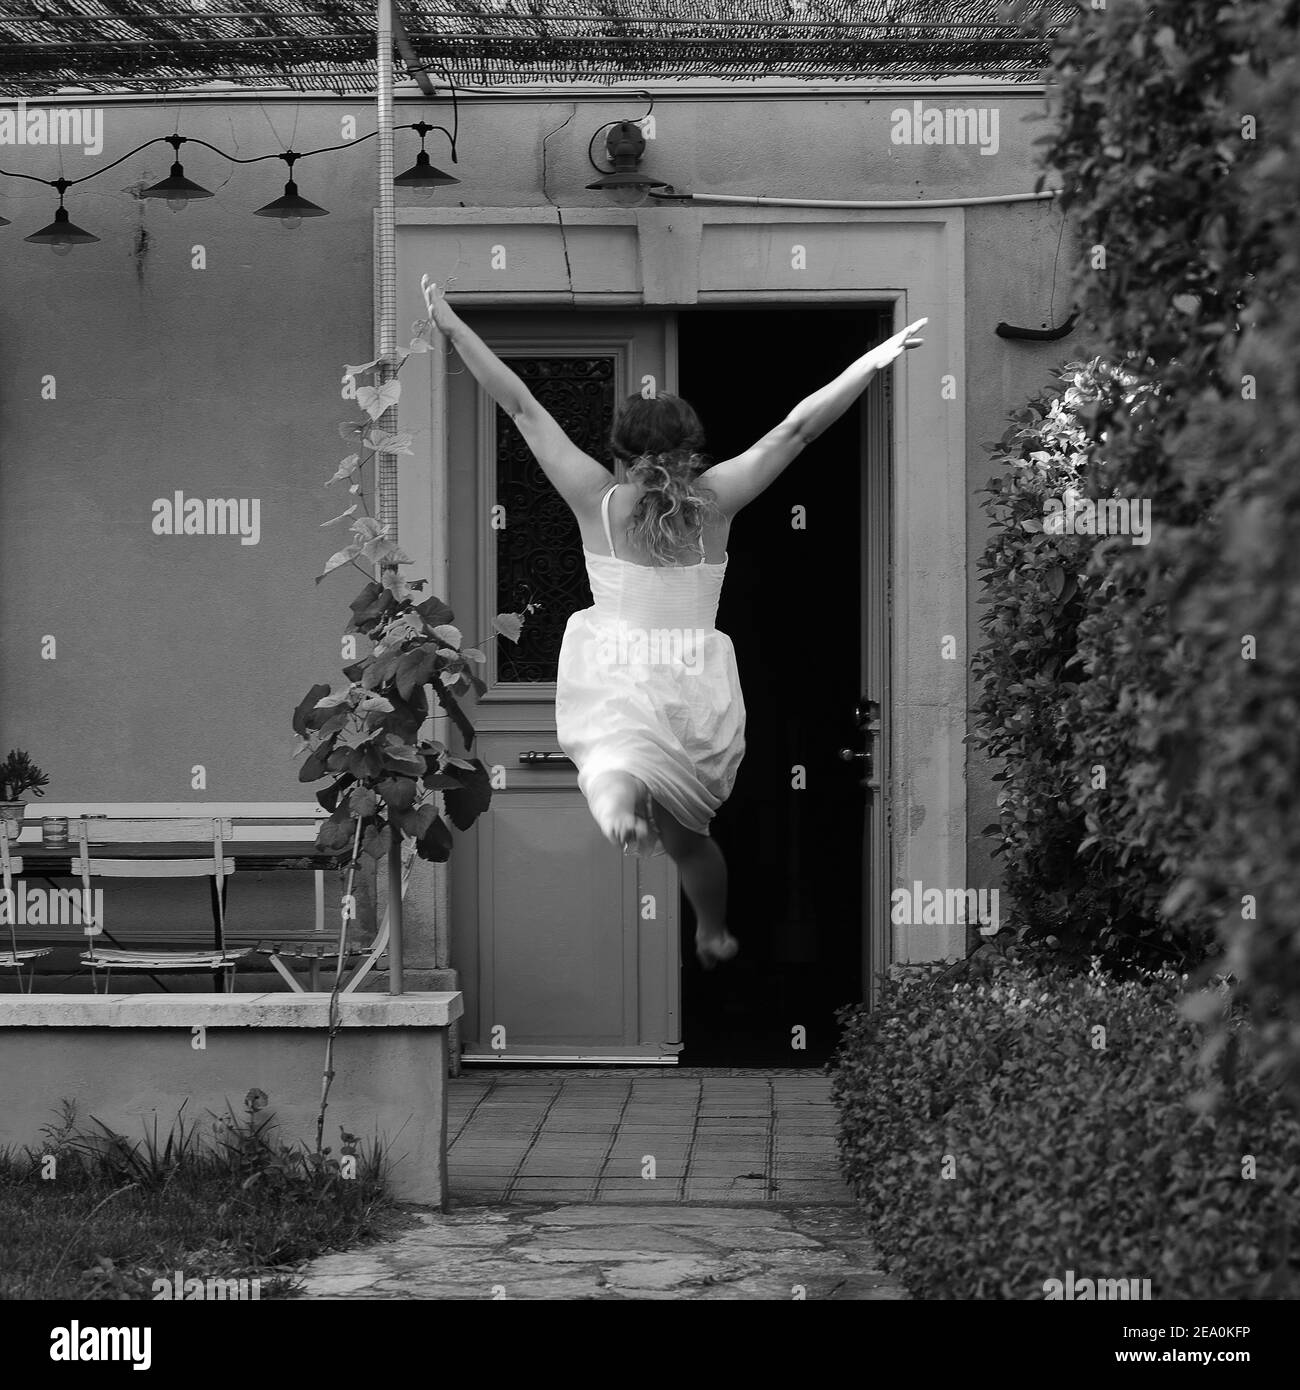 Girl jumping in a garden Stock Photo